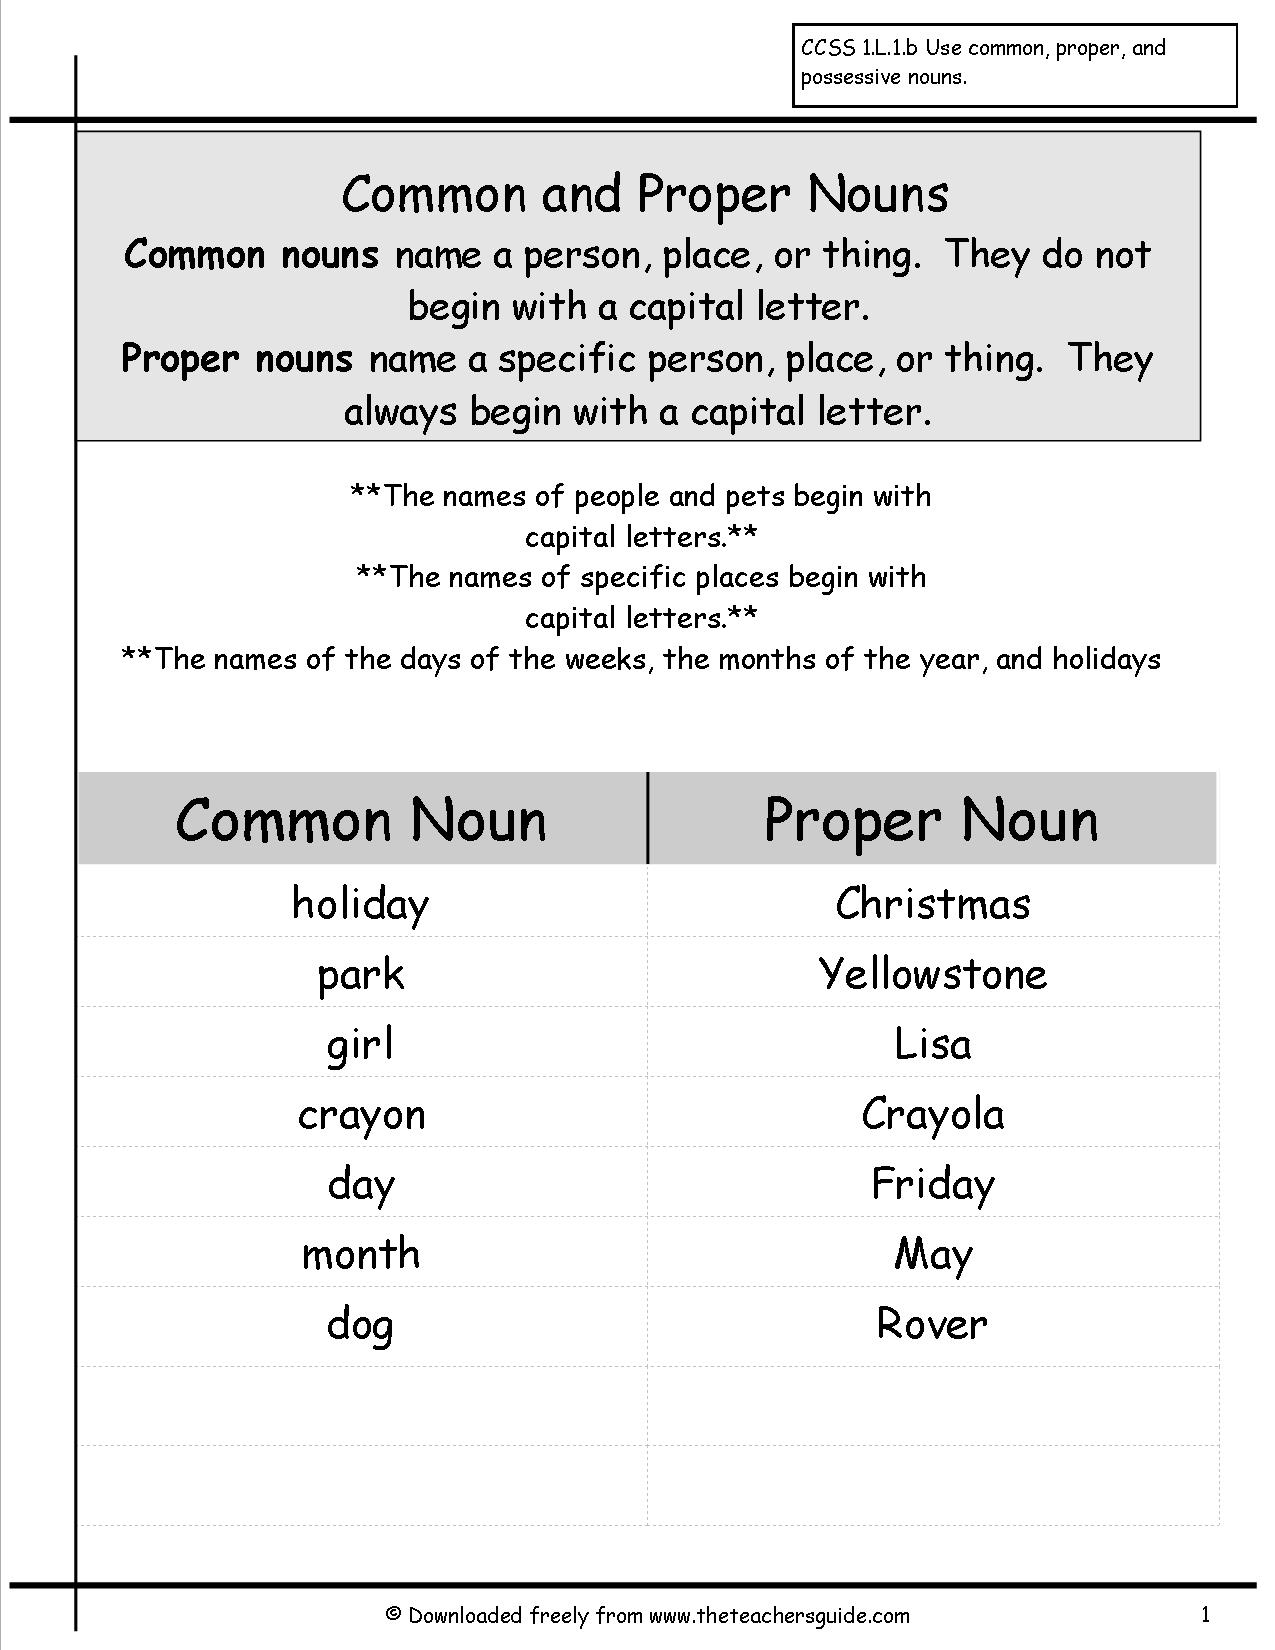 free-printable-worksheets-on-proper-nouns-free-printable-templates